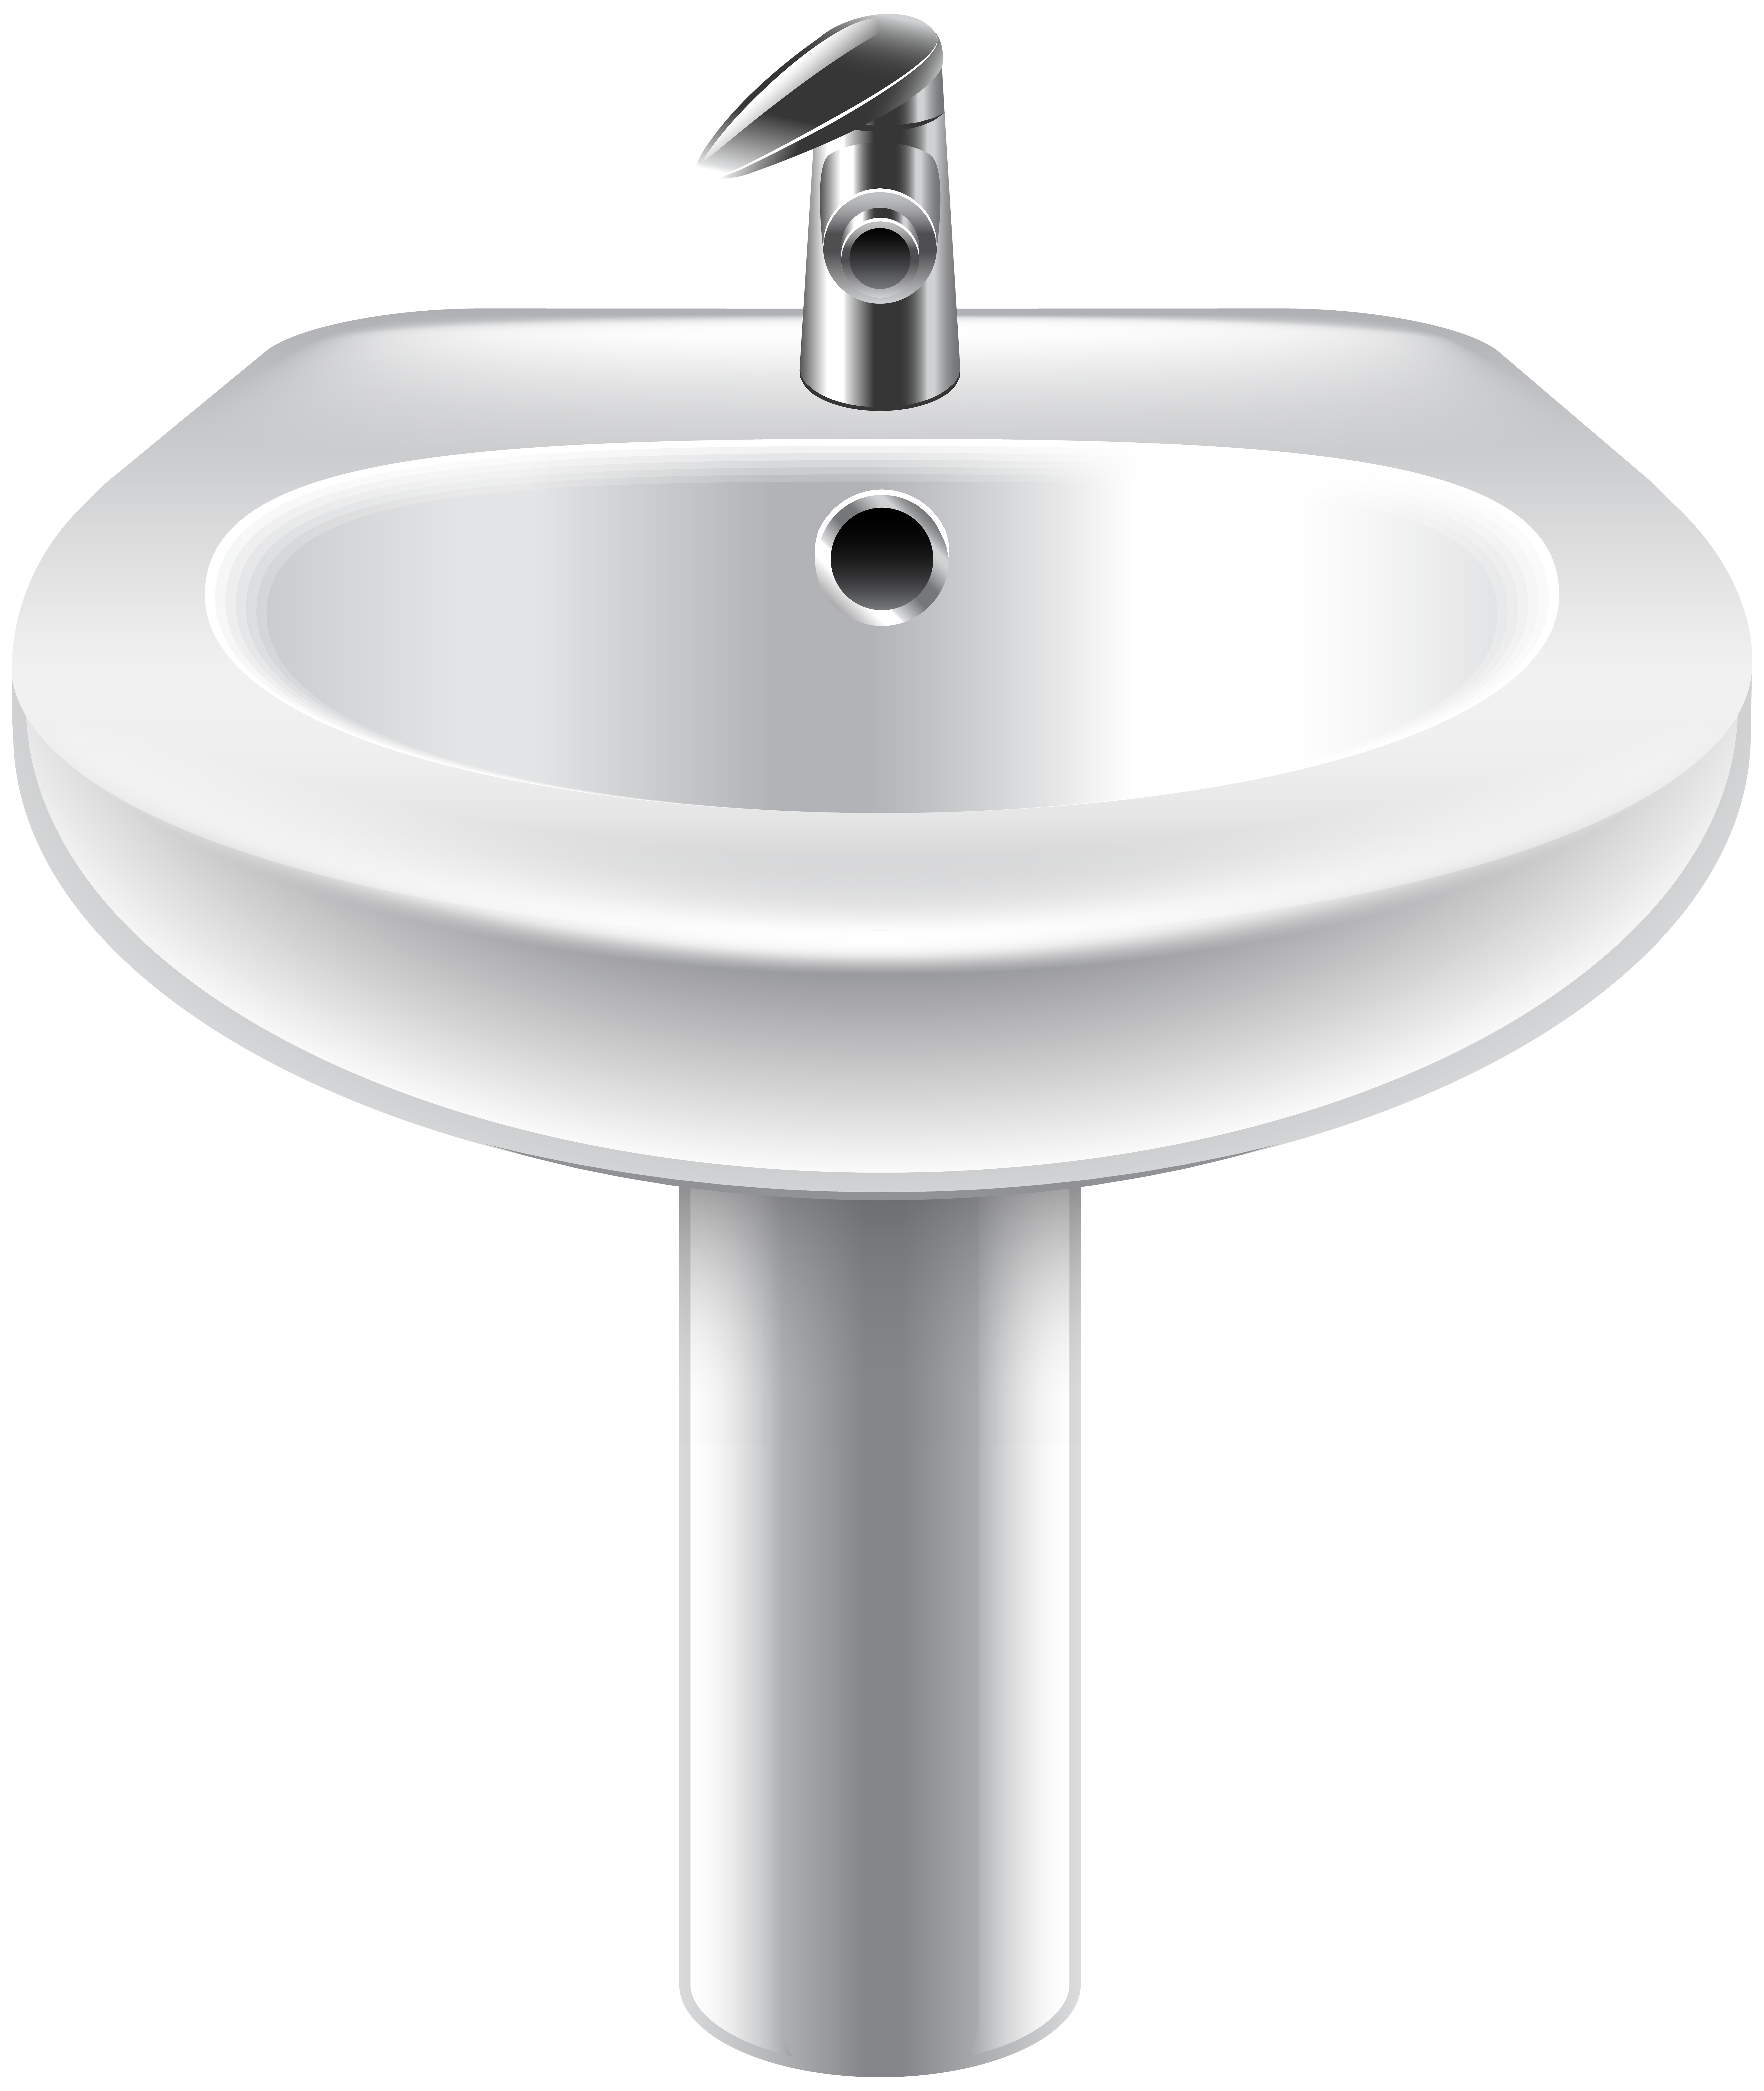 Plumbing clipart tap. Sink png clip art